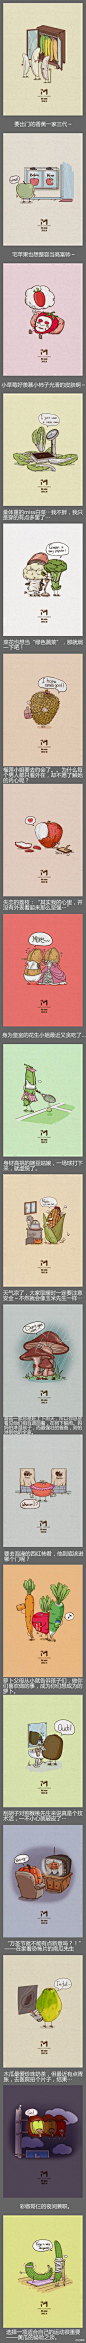 [Cartoon] 推荐@EMO培根火tei 的漫画：蔬果的七七八八~超级有爱~ [#绘画 精选：http://t.cn/zjPhU26 ]